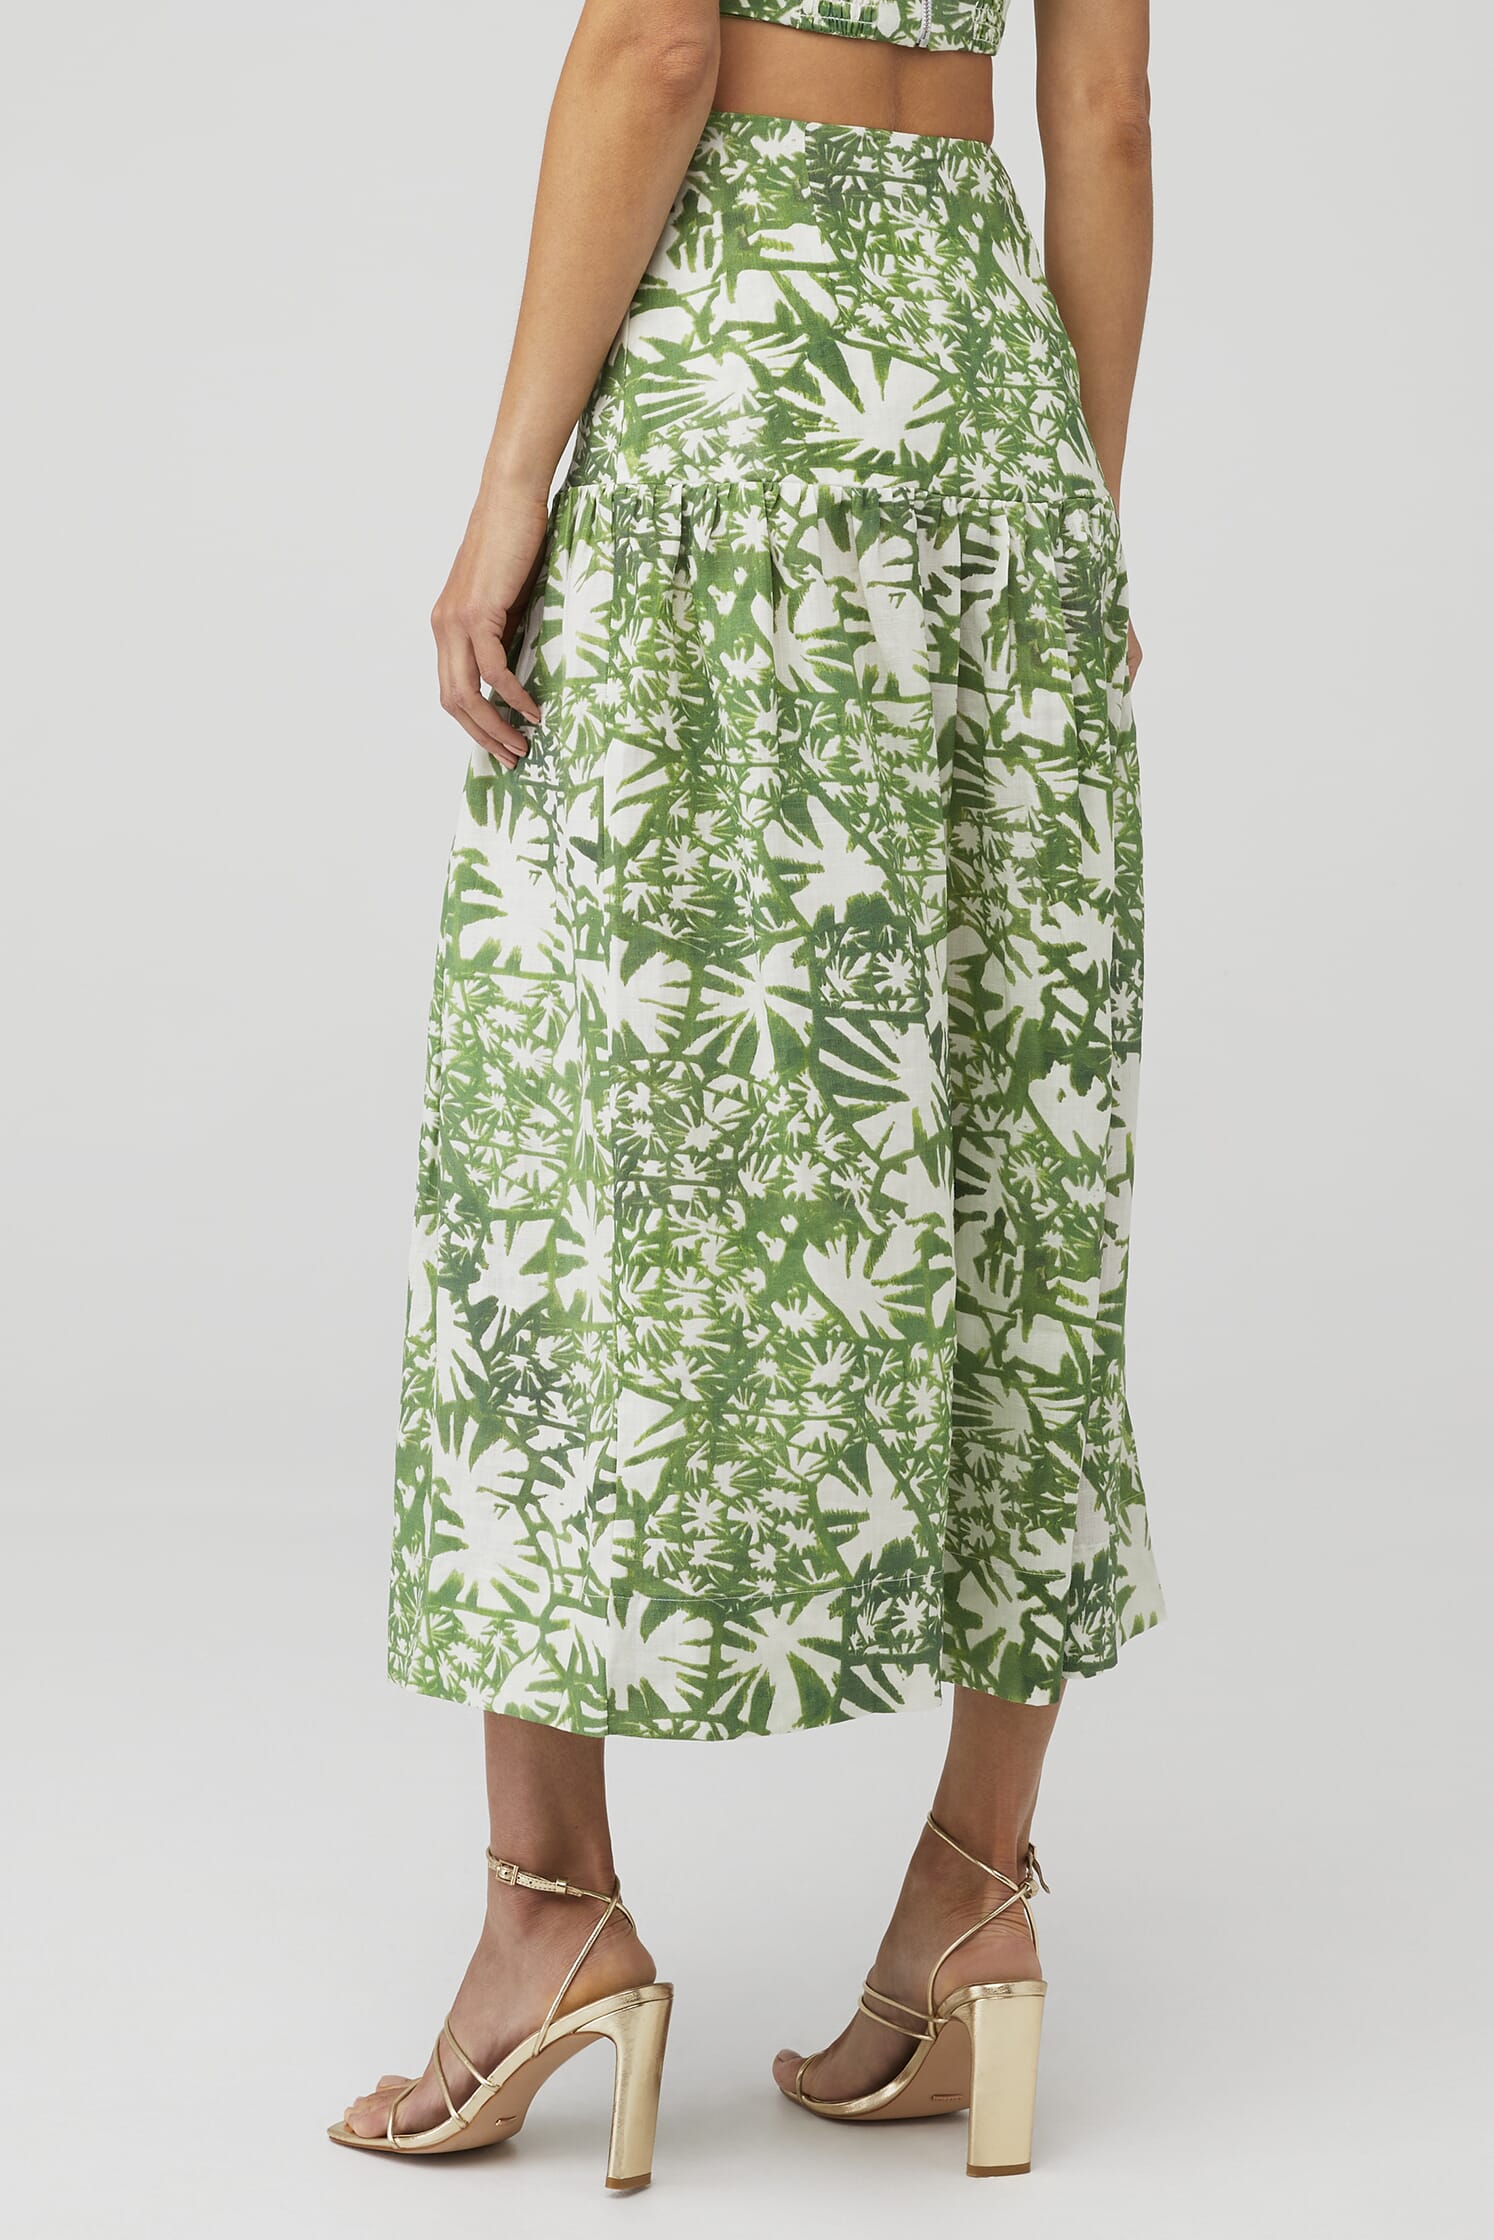 Karina Grimaldi | Devi Print Midi Skirt in Savanna | FashionPass